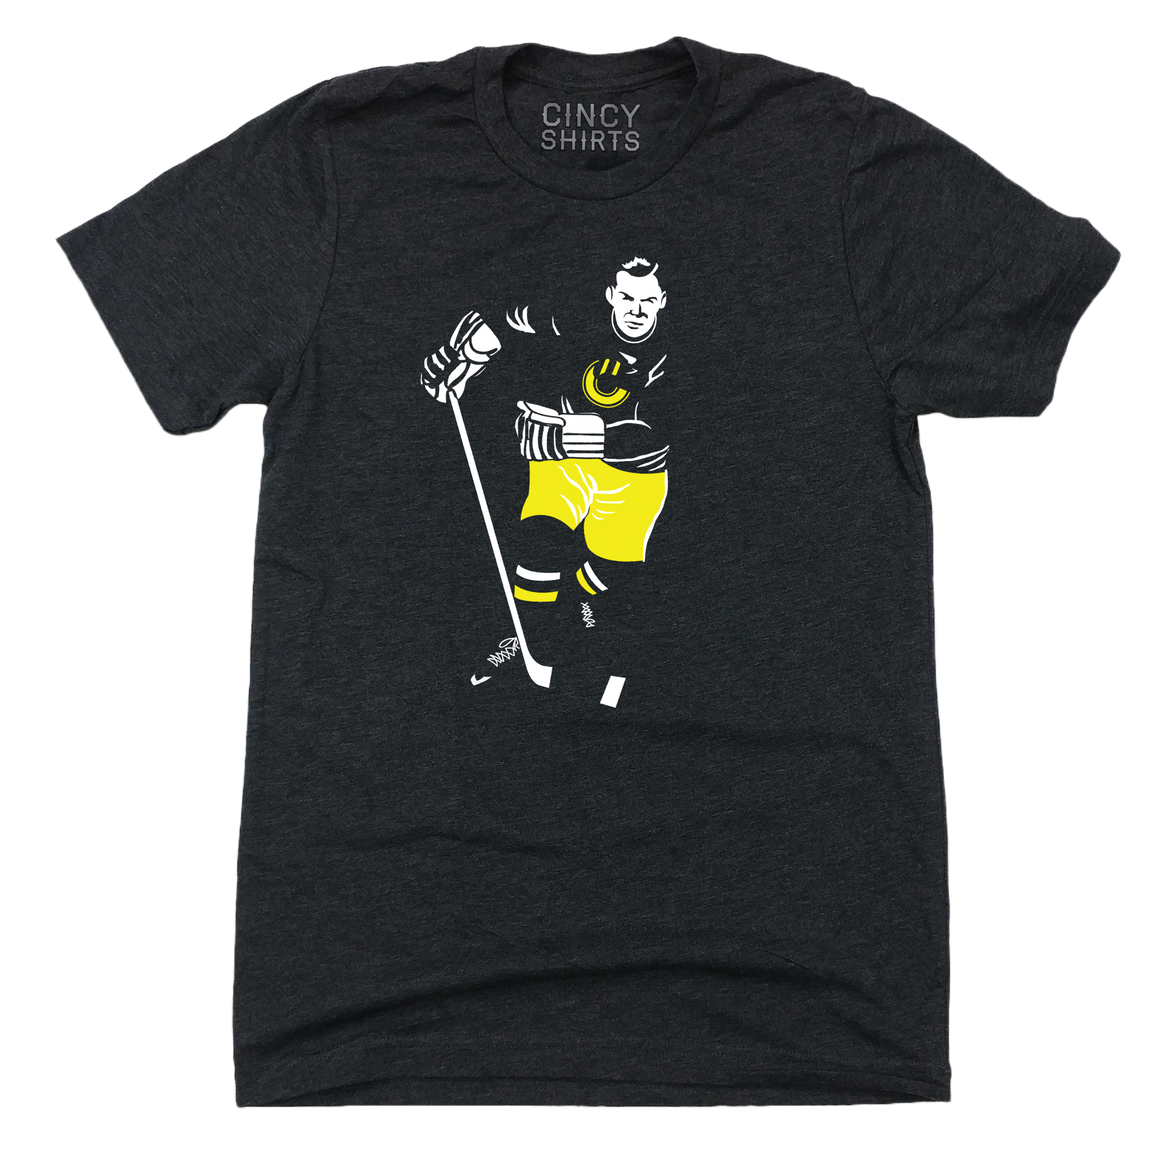 Stingers Hockey Player - Cincy Shirts